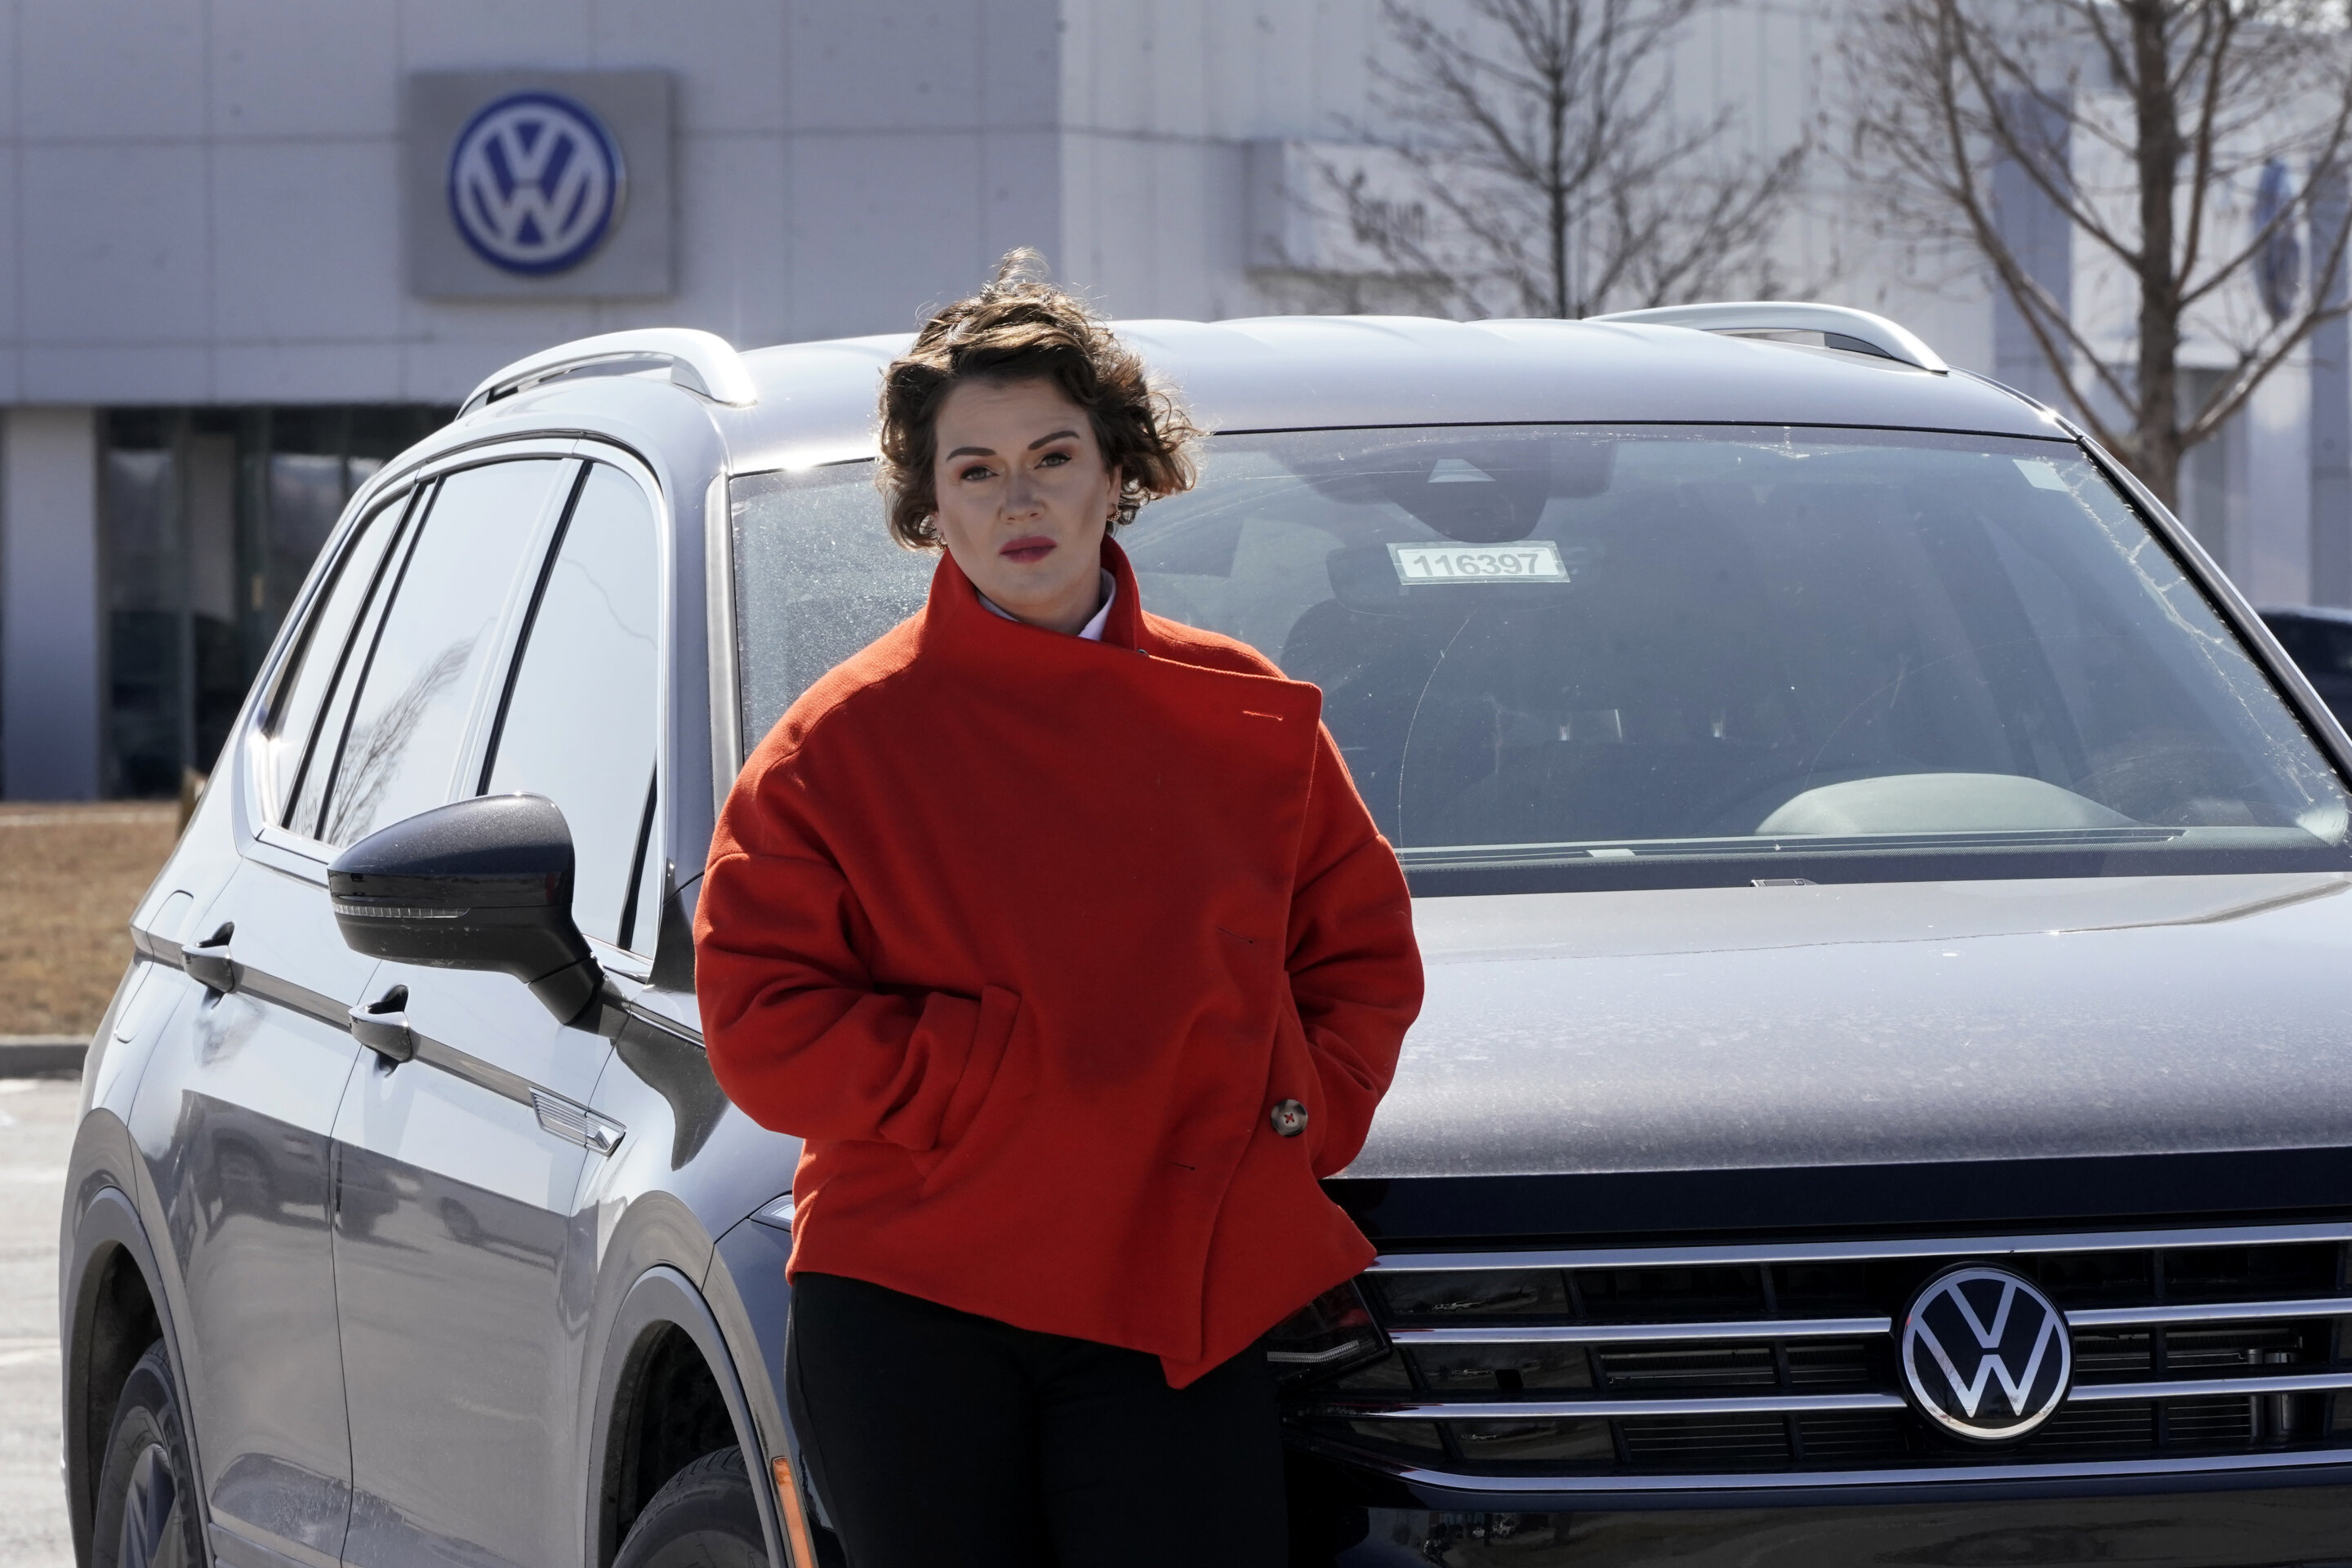 #Sudden braking in 2 VW SUV models draws regulatory scrutiny